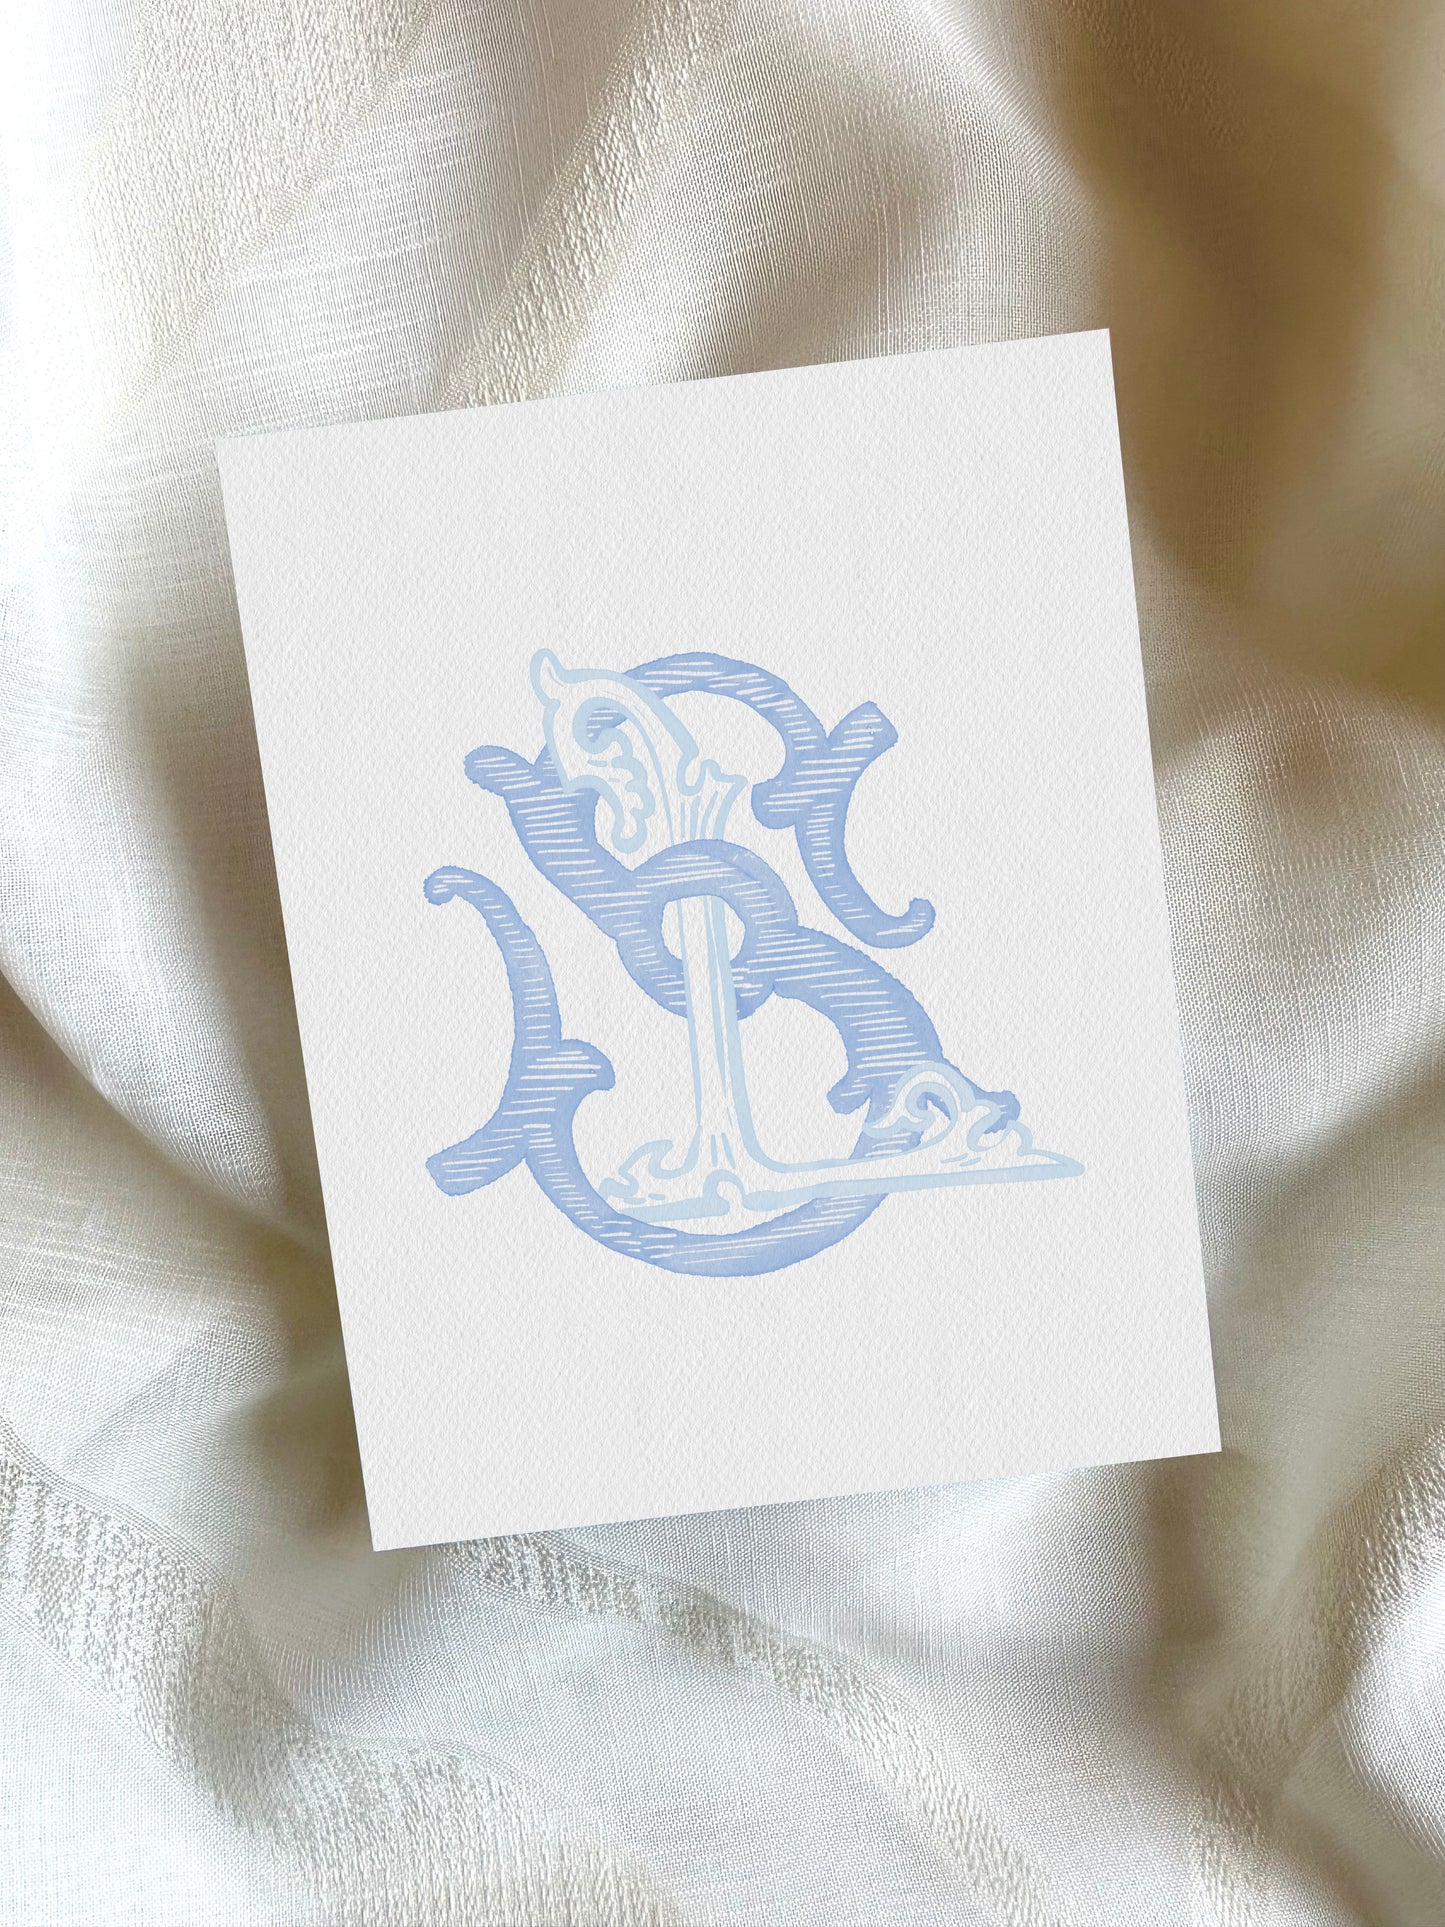 2 Letter Monogram with Letters SL LS | Digital Download - Wedding Monogram SVG, Personal Logo, Wedding Logo for Wedding Invitations The Wedding Crest Lab